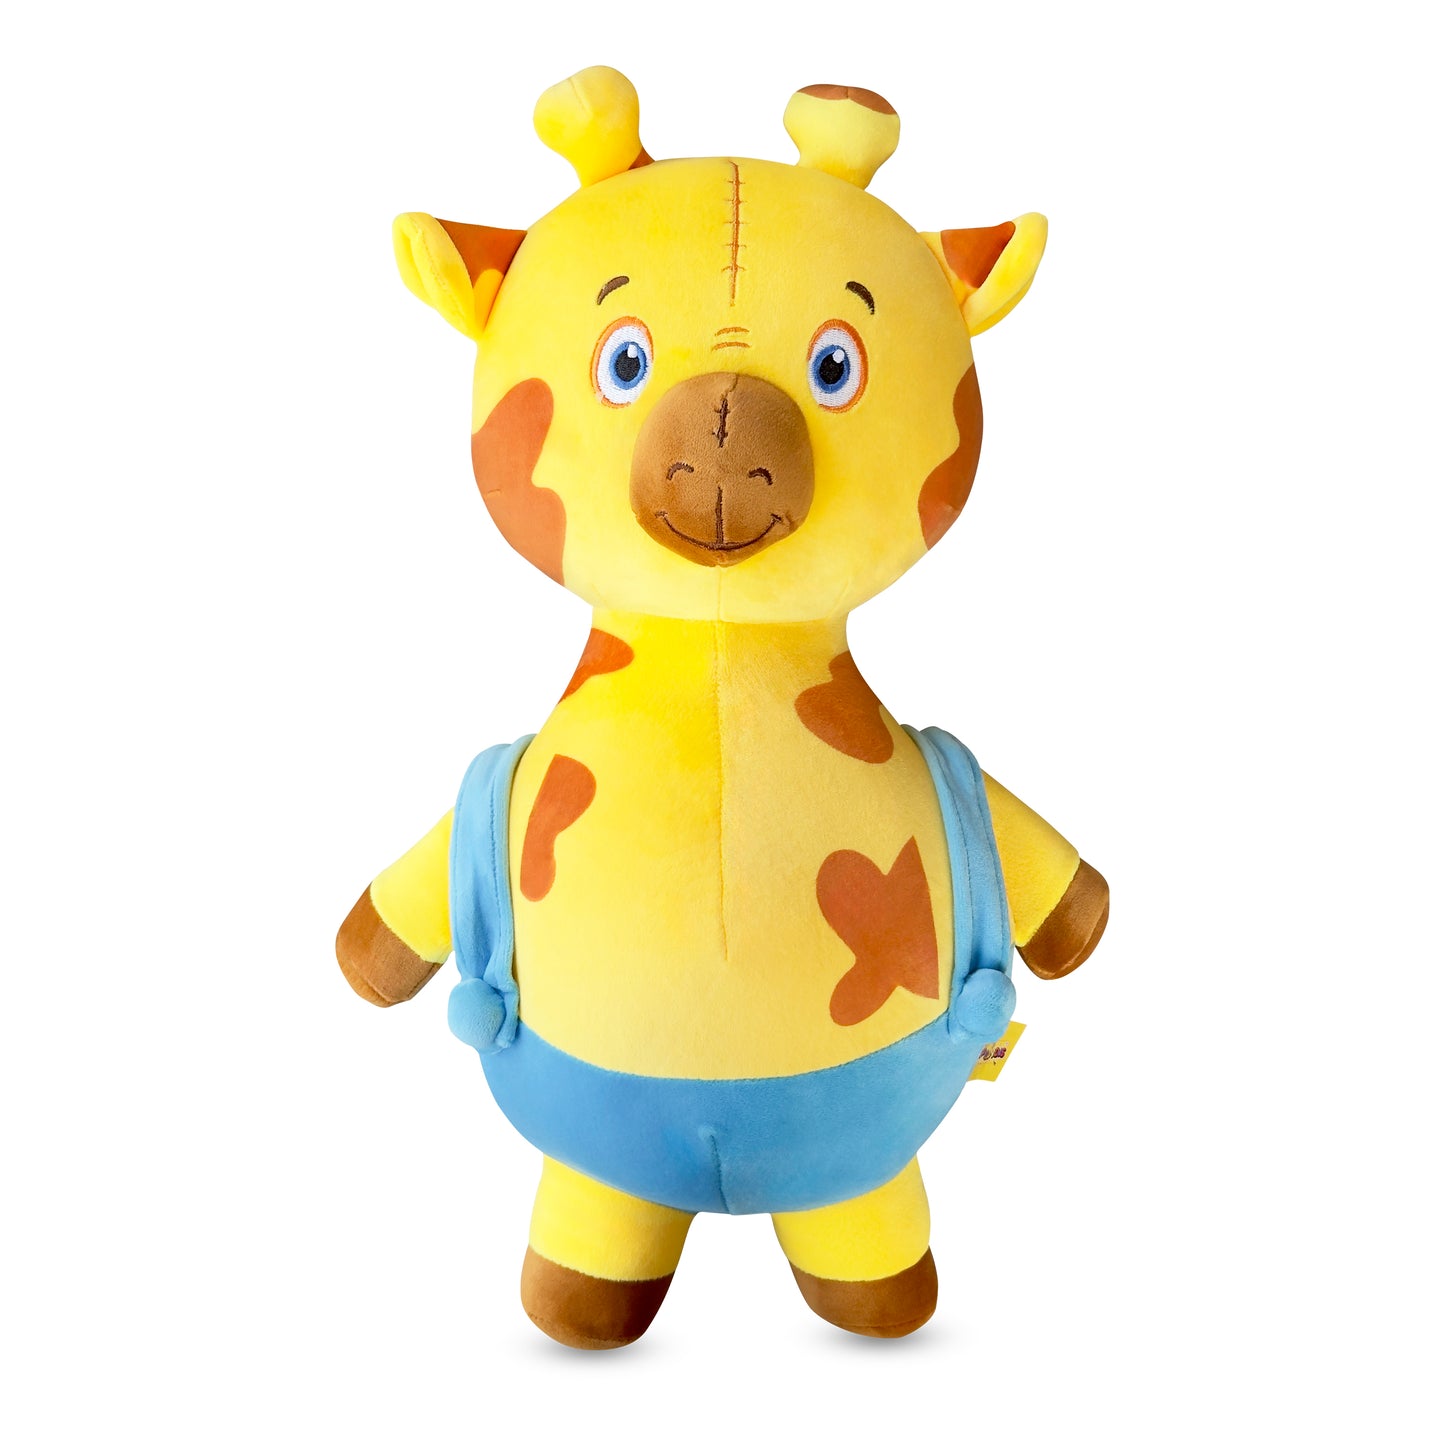 Gio the giraffe stuffed animal plush toy by Happydandis